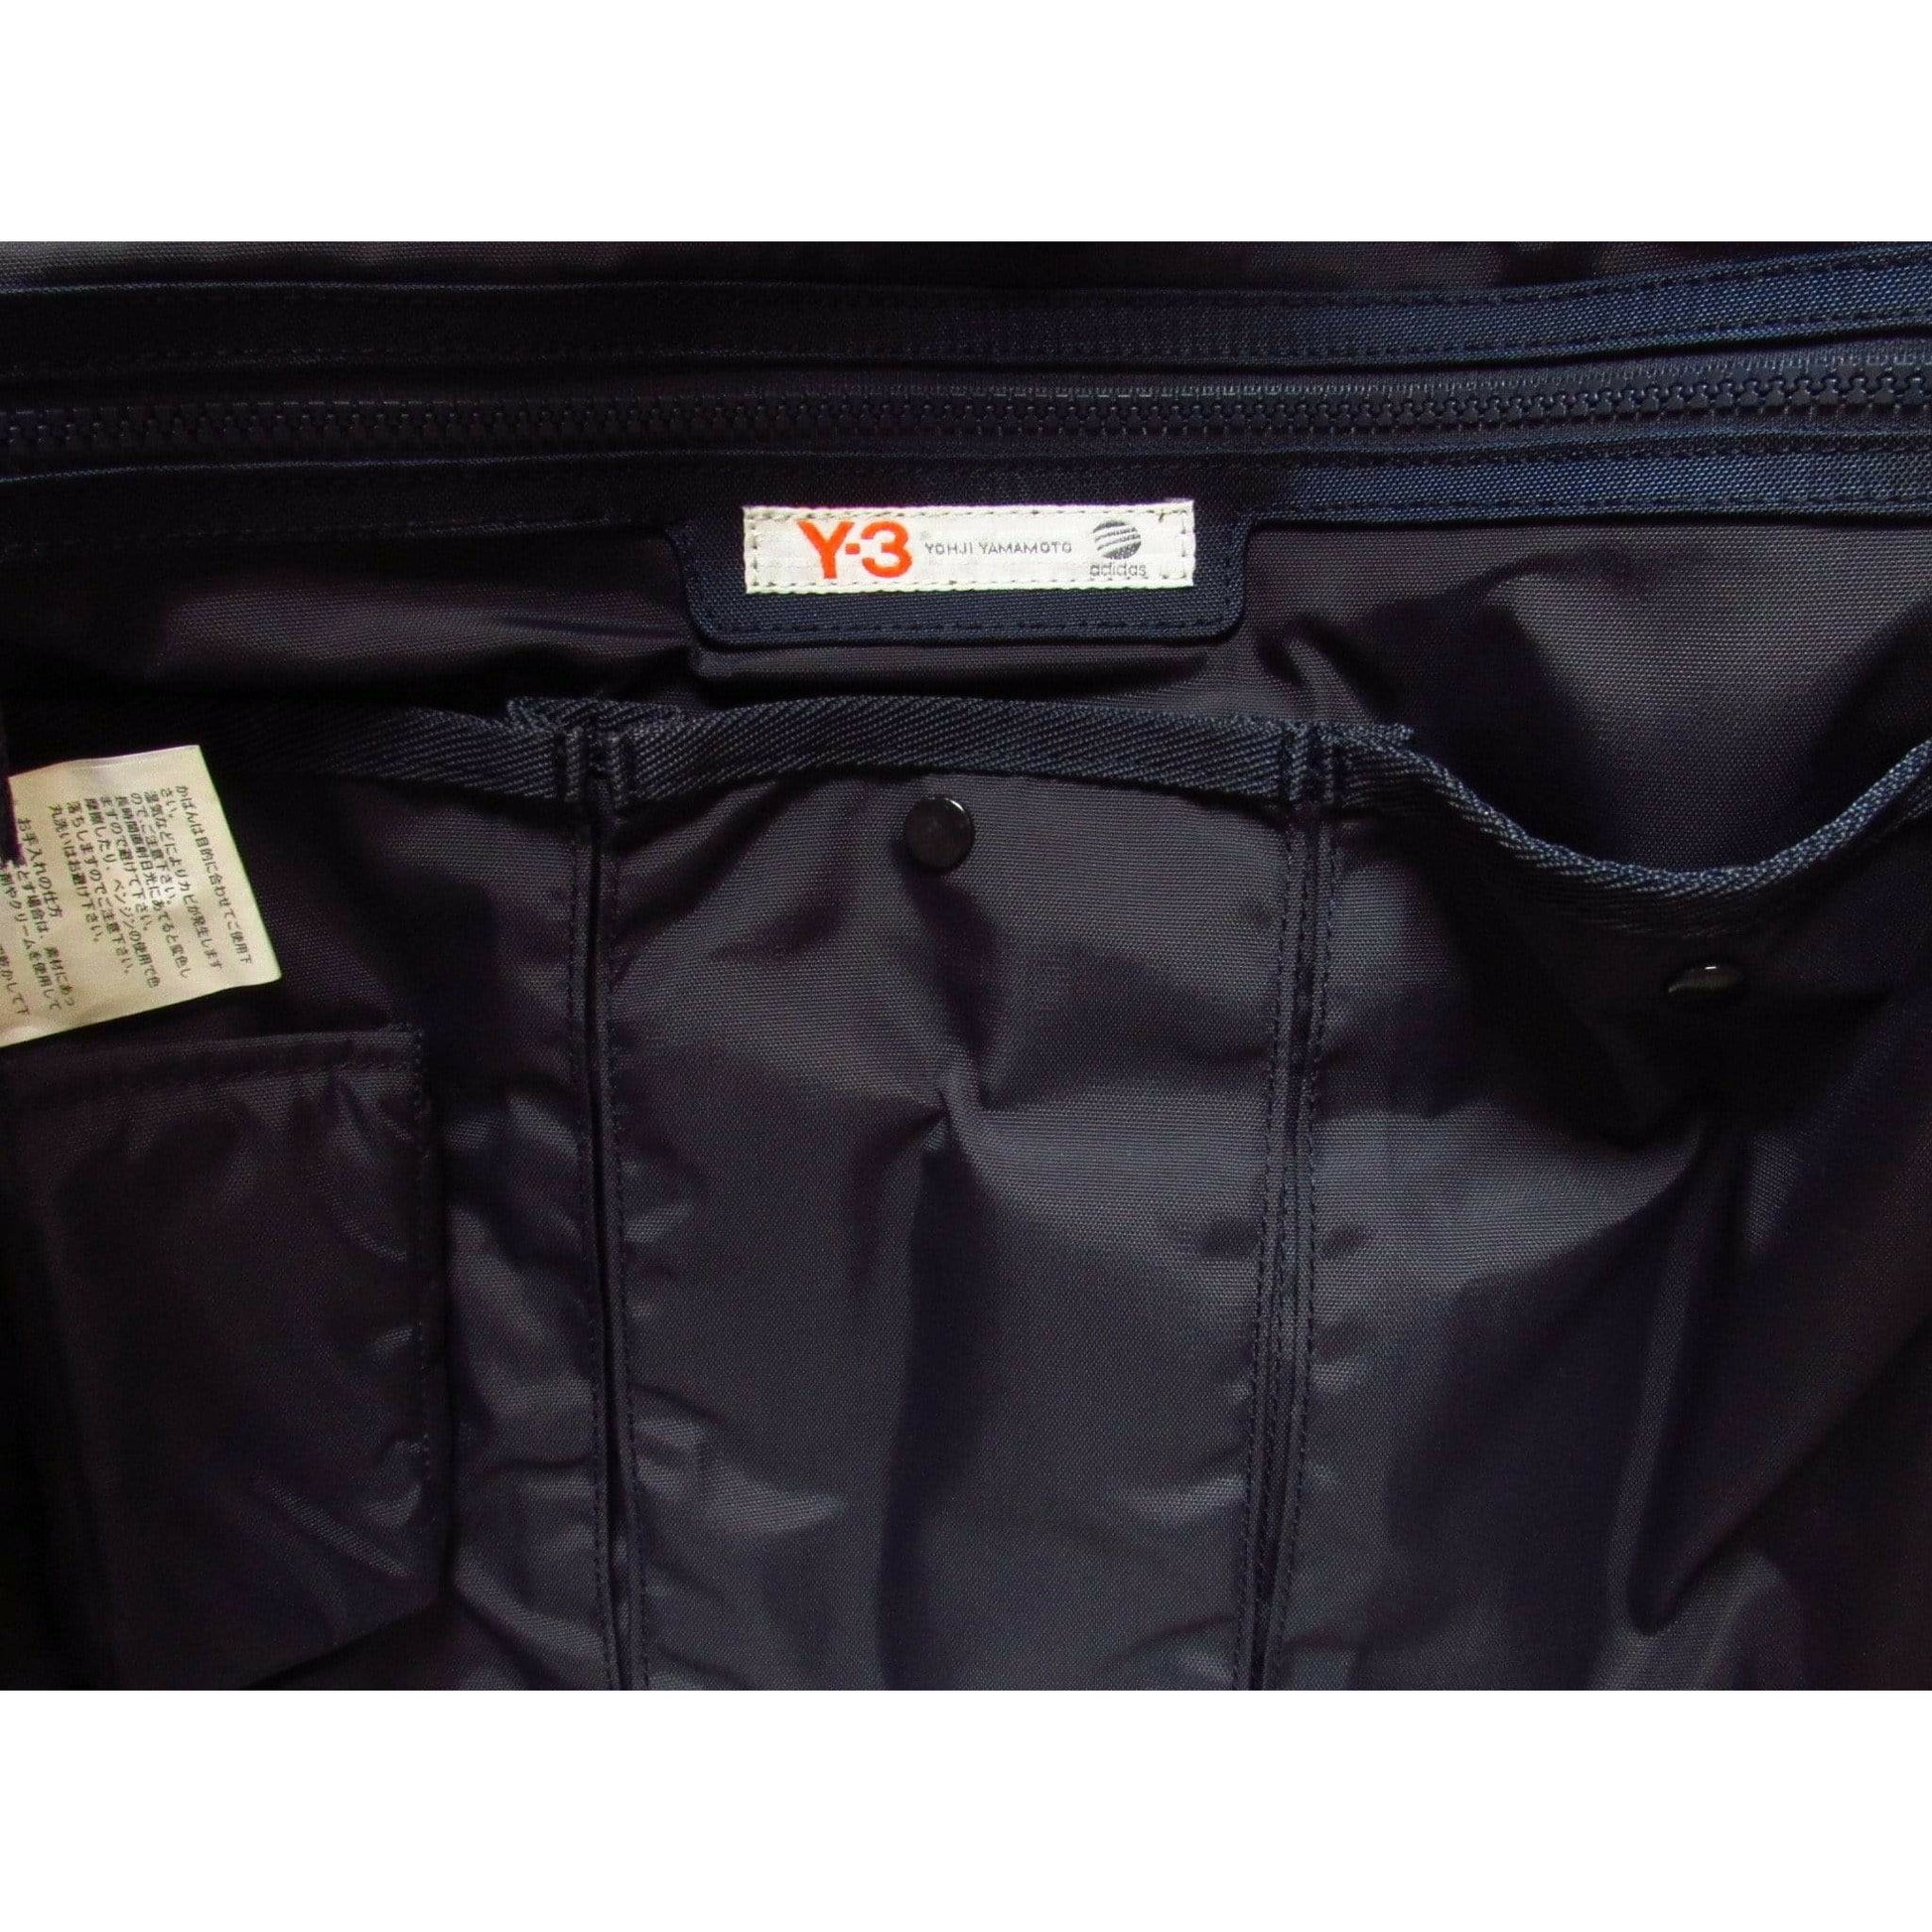 Handbags y-3-yohji-yamamoto-marine-messenger-bag Black